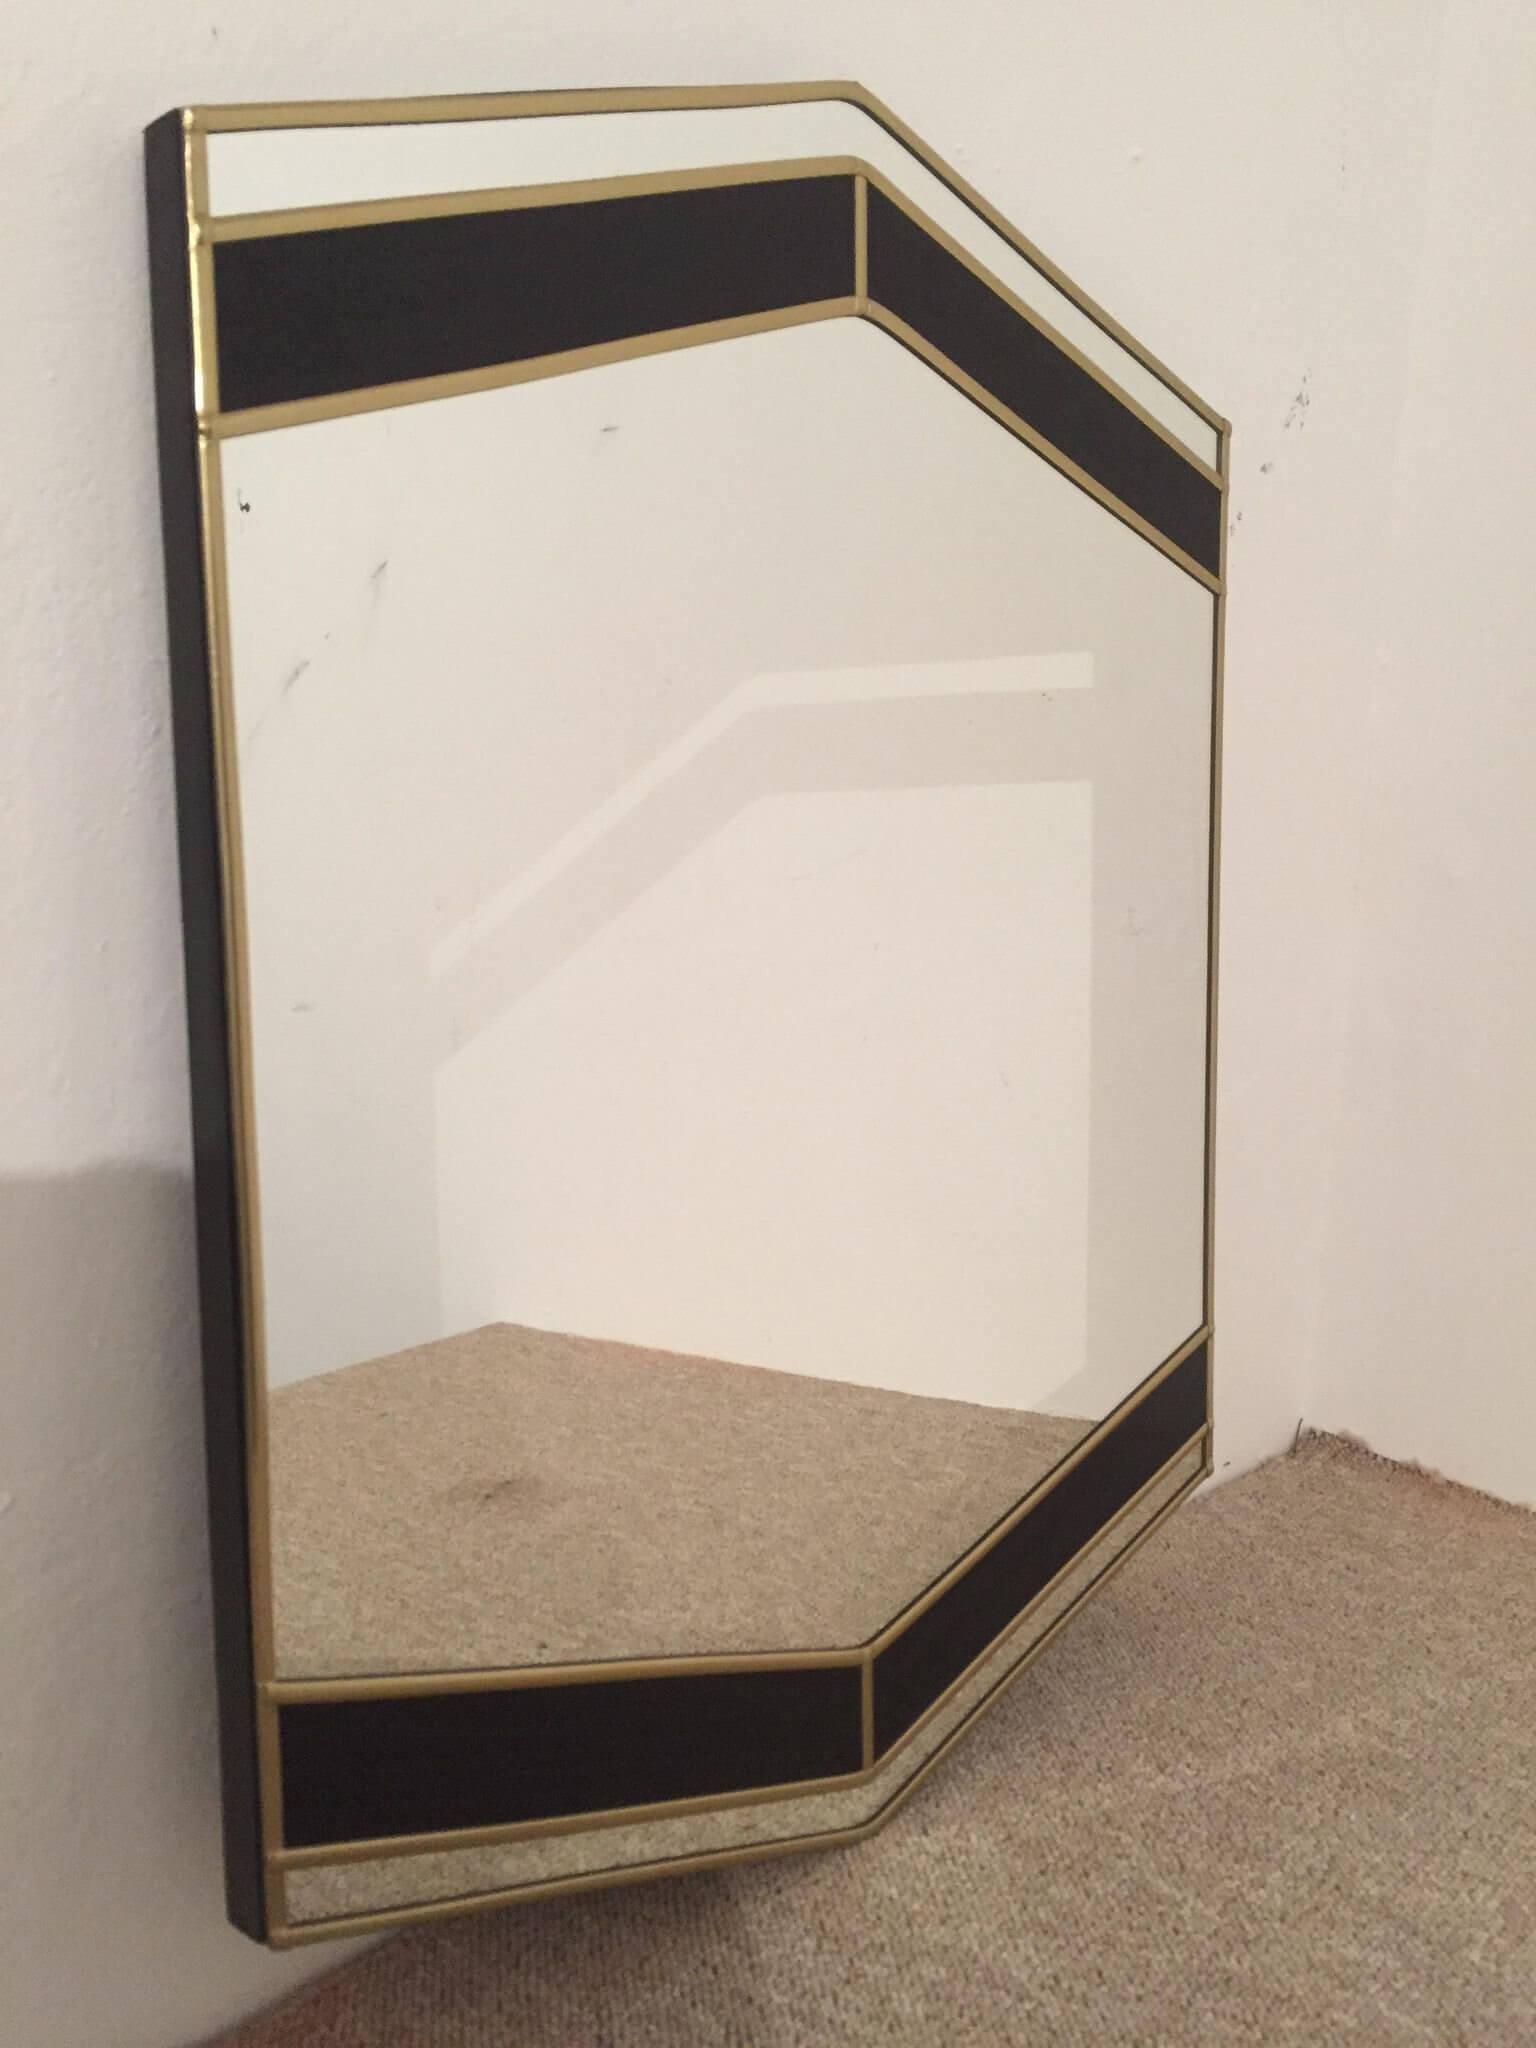 Original handcrafted hexagonal wall mirror